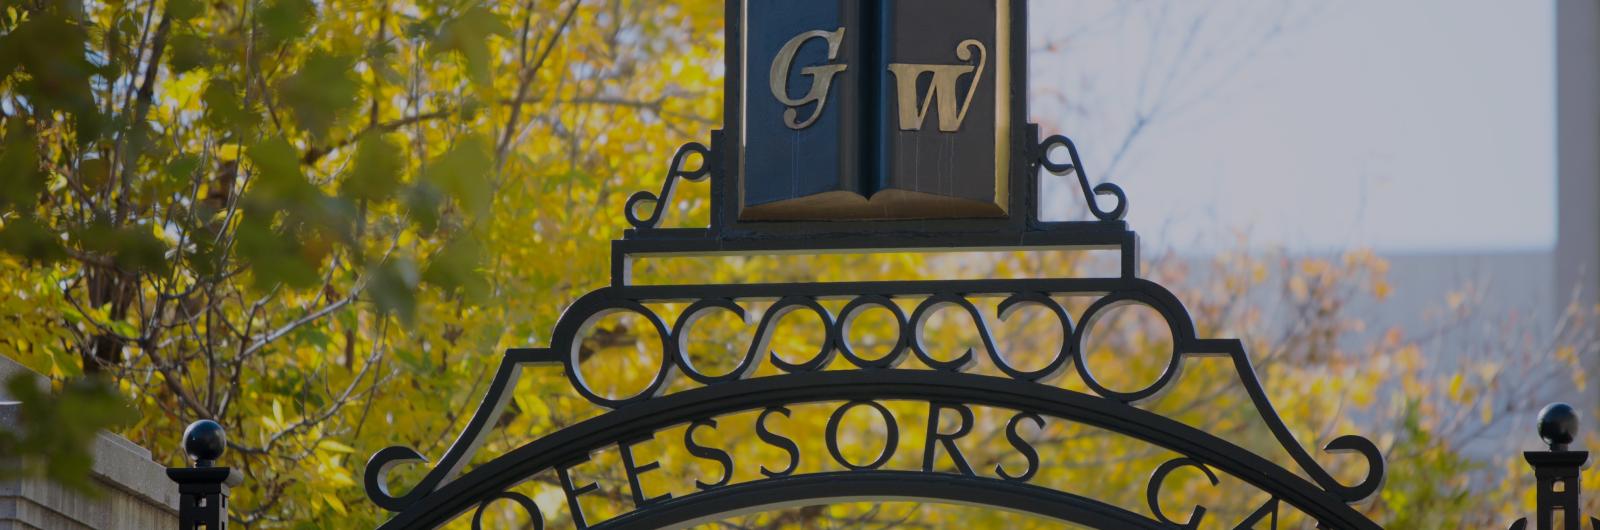 GW Professors Gate